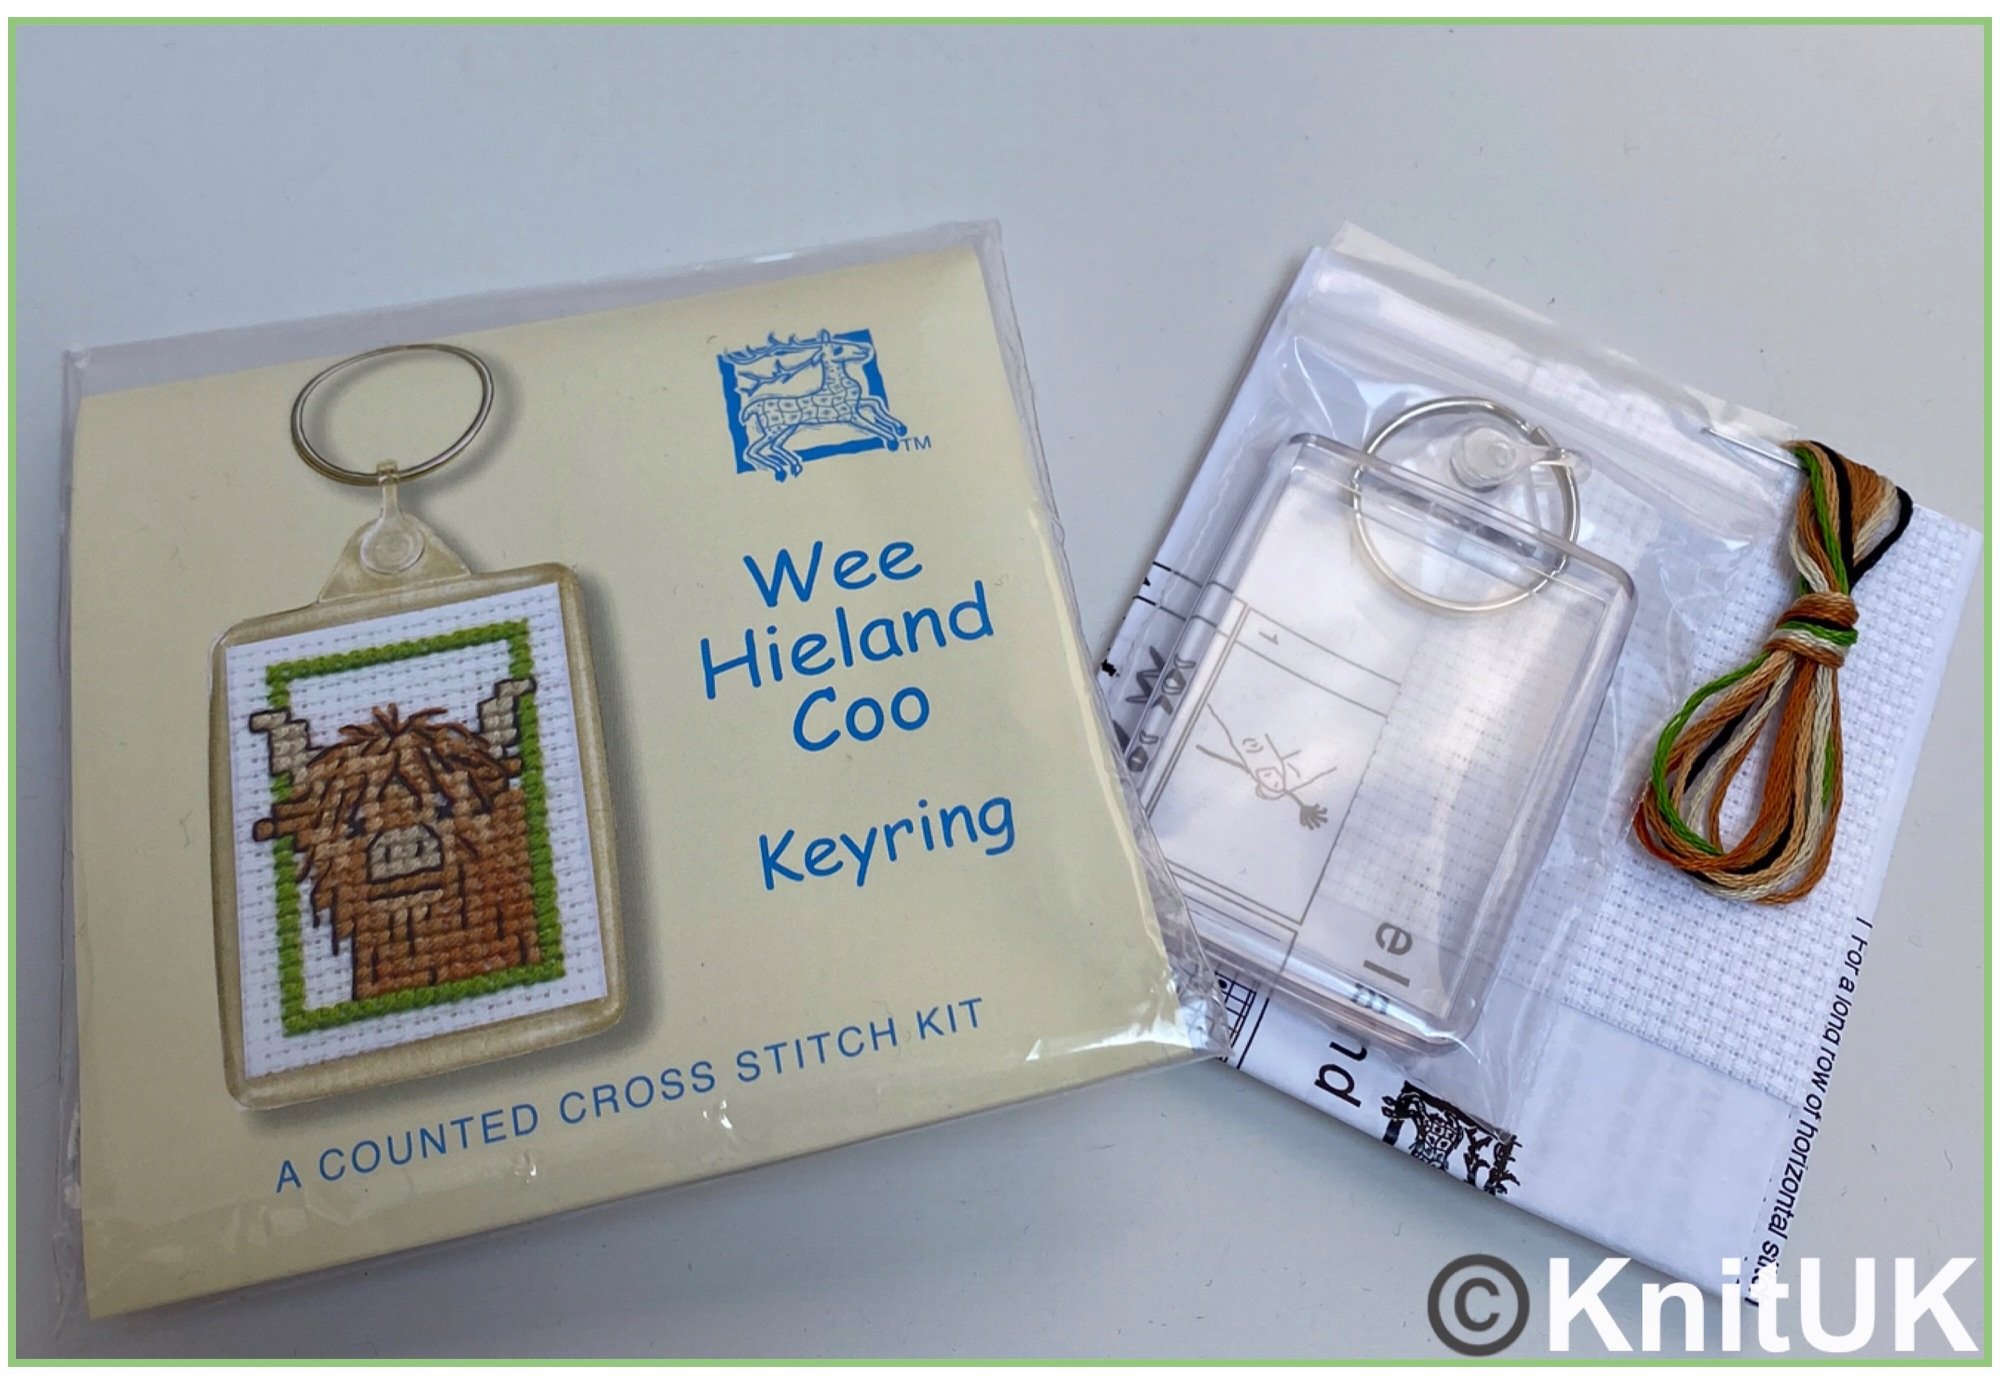 Textile heritage keyring cross stitch kit wee hieland coo